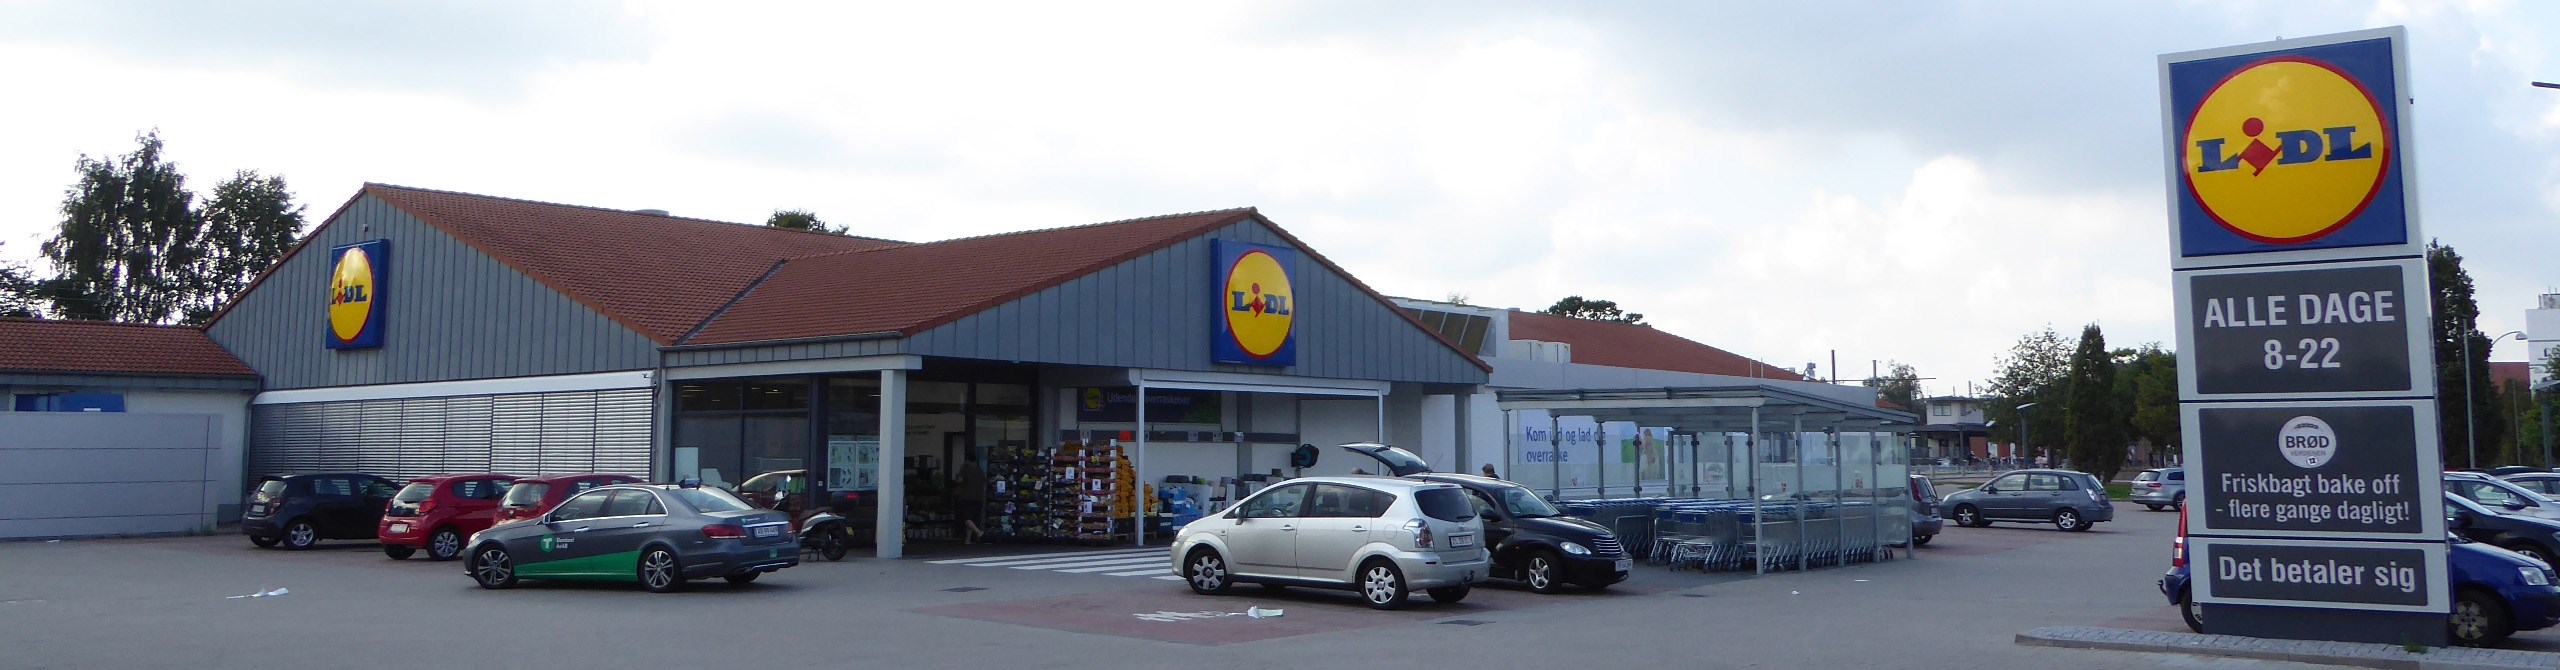 Lidl Store, Herlev, Denmark. Photo: Wikimedia Commons